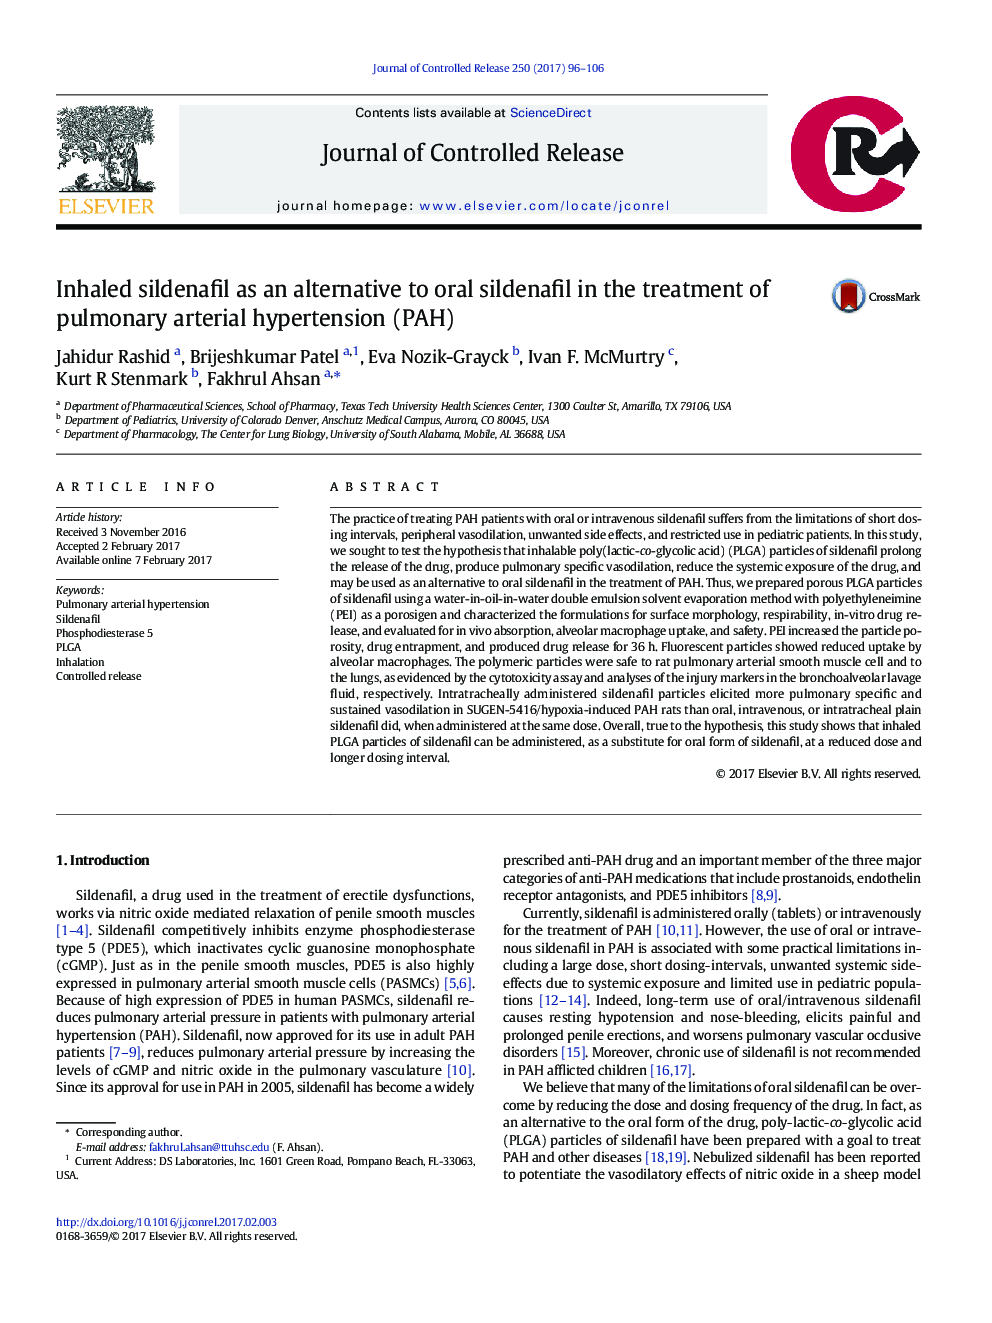 Inhaled sildenafil as an alternative to oral sildenafil in the treatment of pulmonary arterial hypertension (PAH)